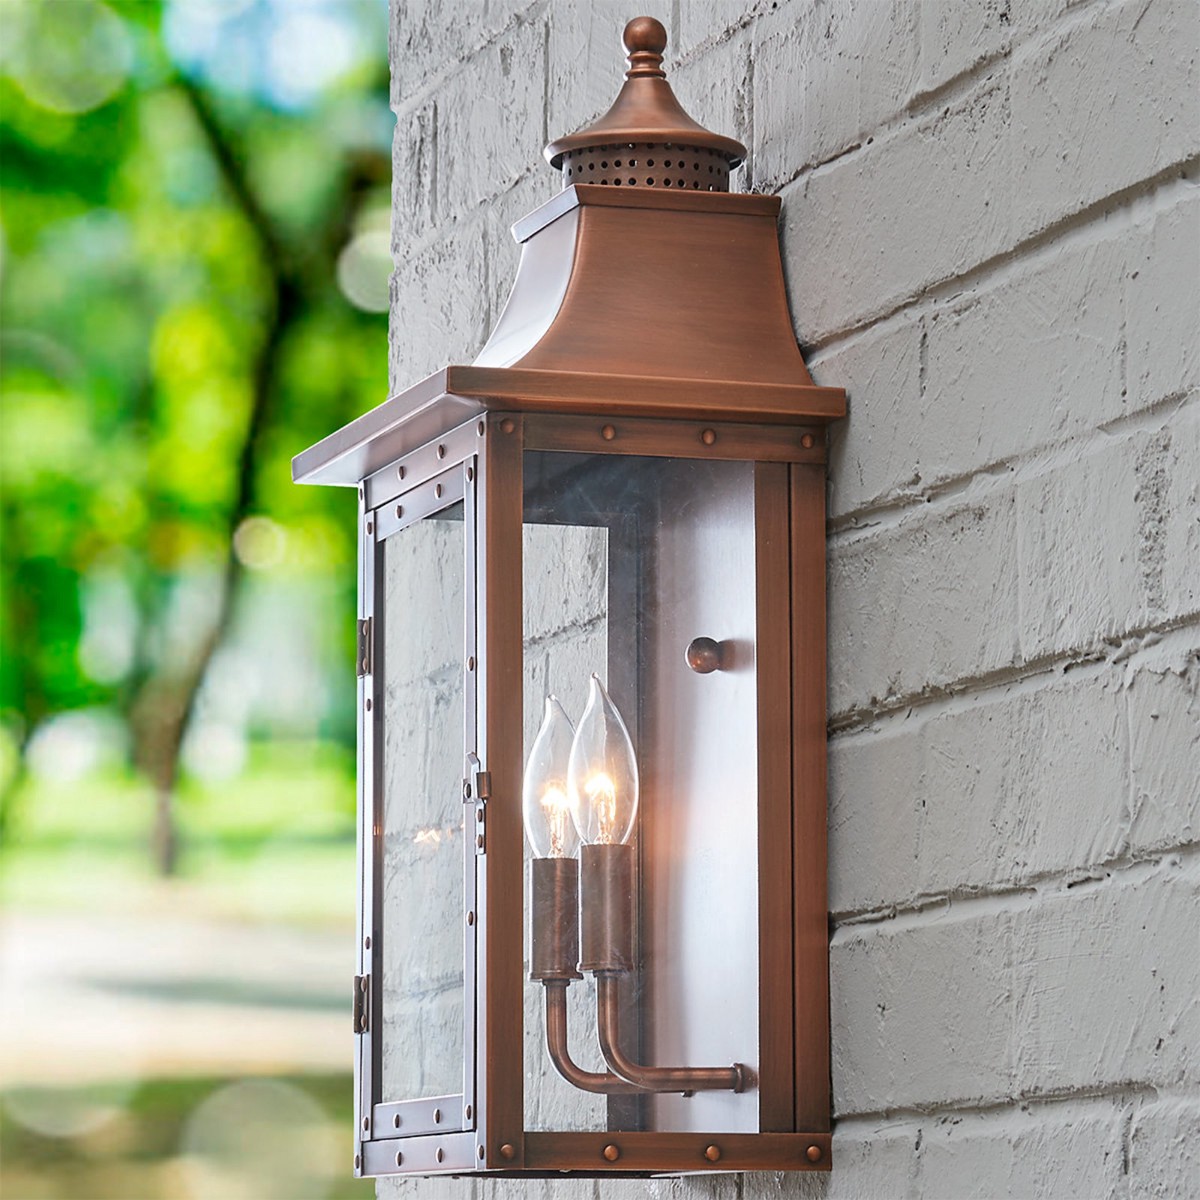 Decorate The Garden With Beautiful Copper Outdoor Light Fixtures | by Gulf Coast Lanterns | Jun, 2022 | Medium